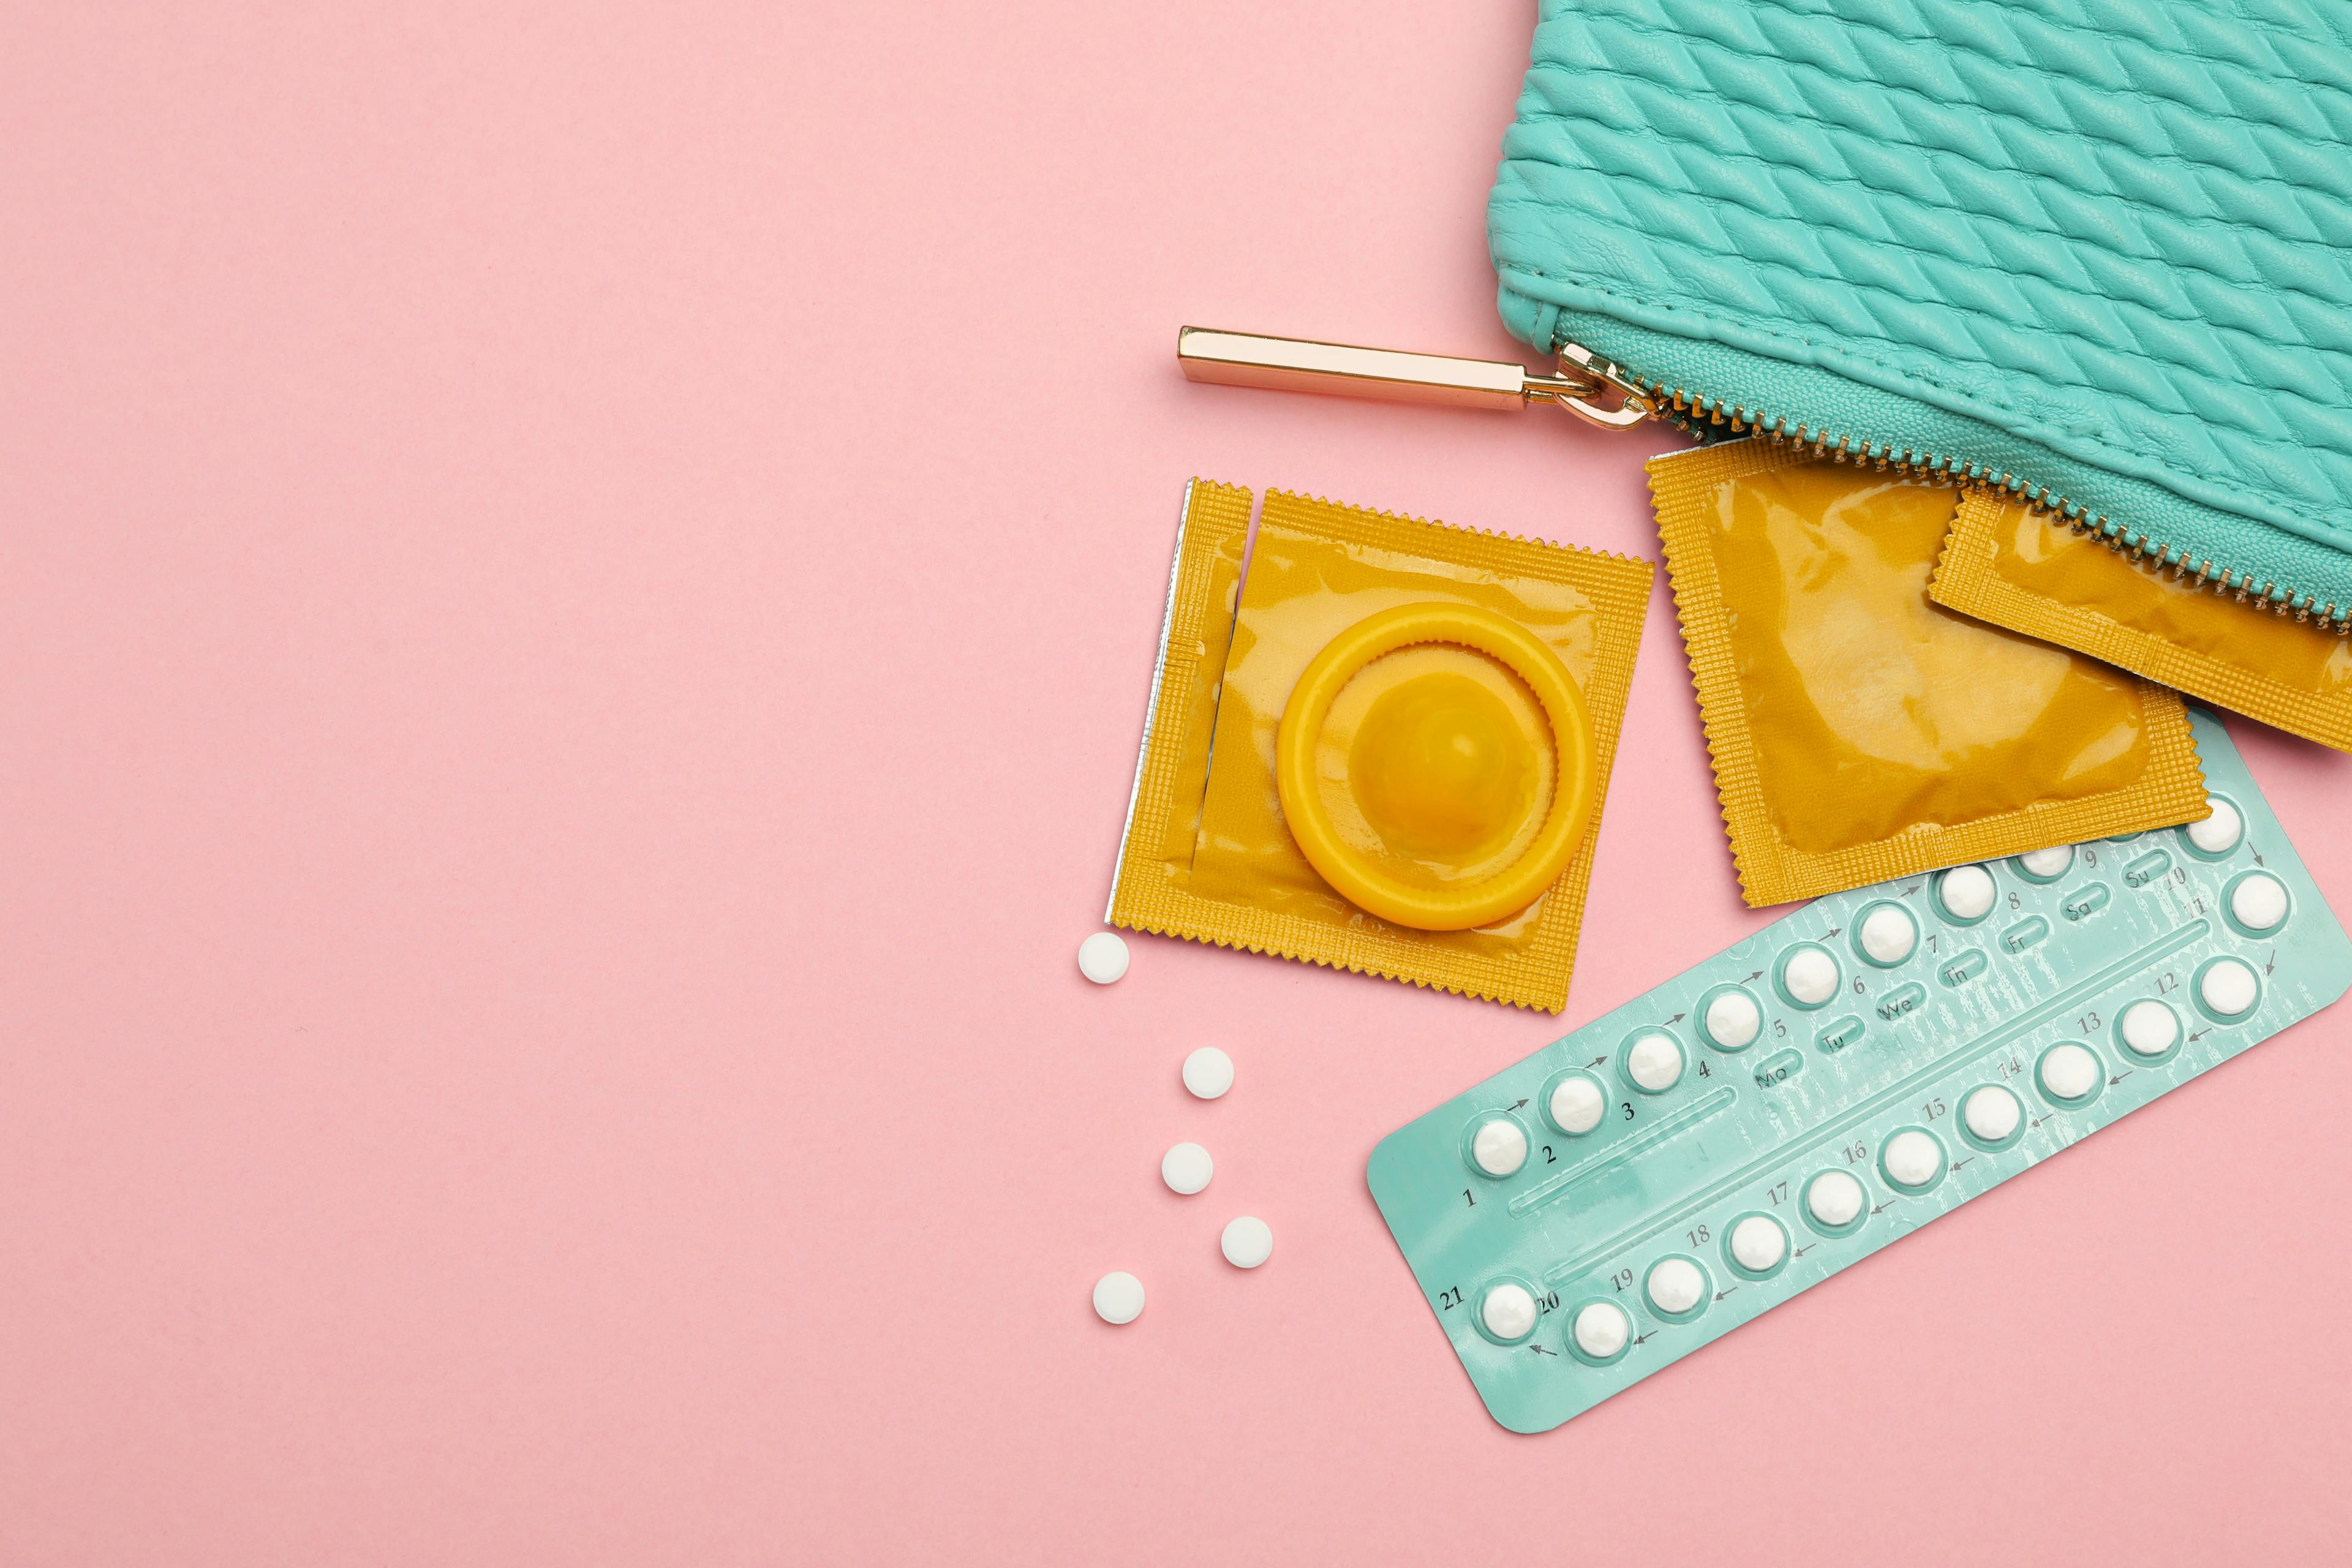 Pharmacist Prescribing of Contraception Could Improve Access